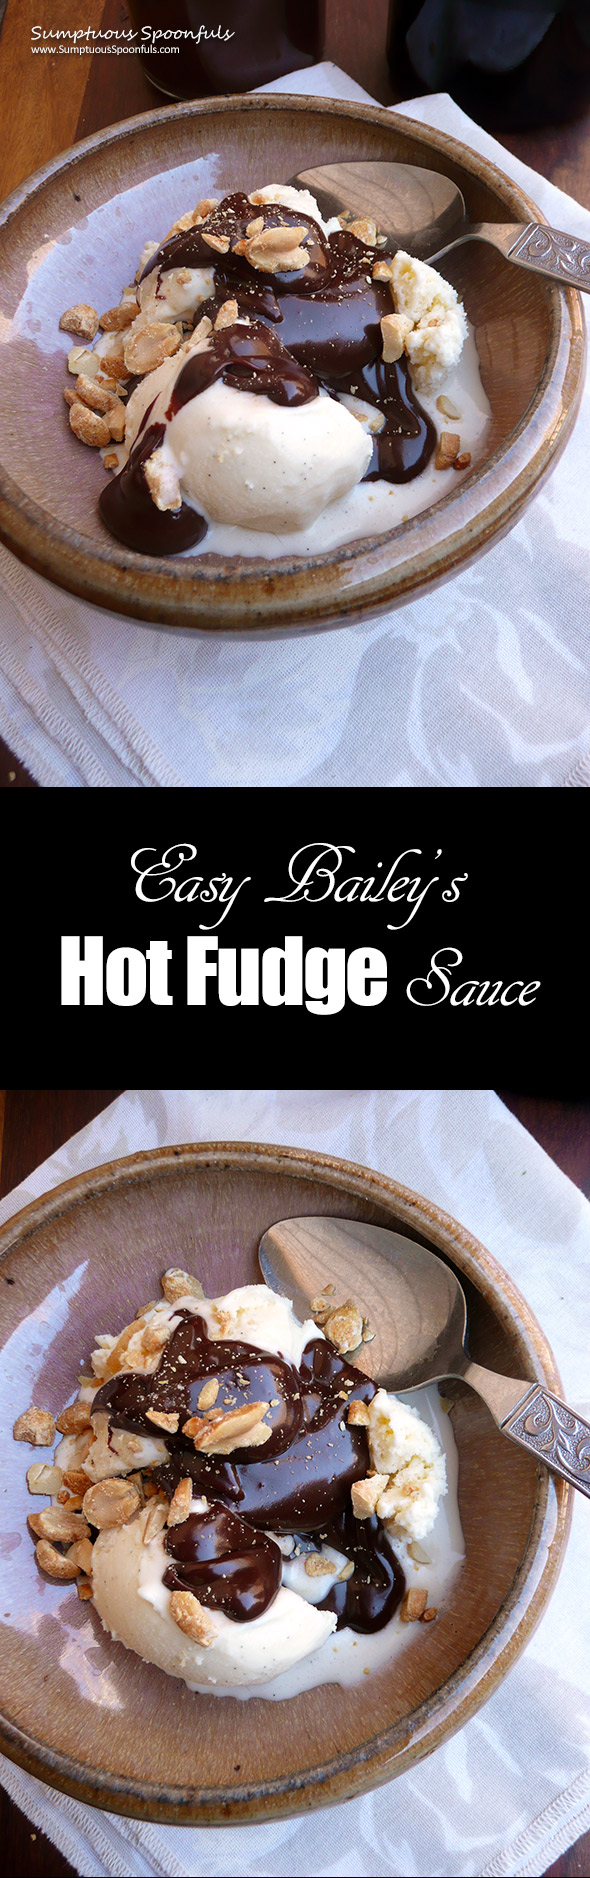 Easy Bailey's Hot Fudge Sauce ~ Sumptuous Spoonfuls #hotfudge #recipe